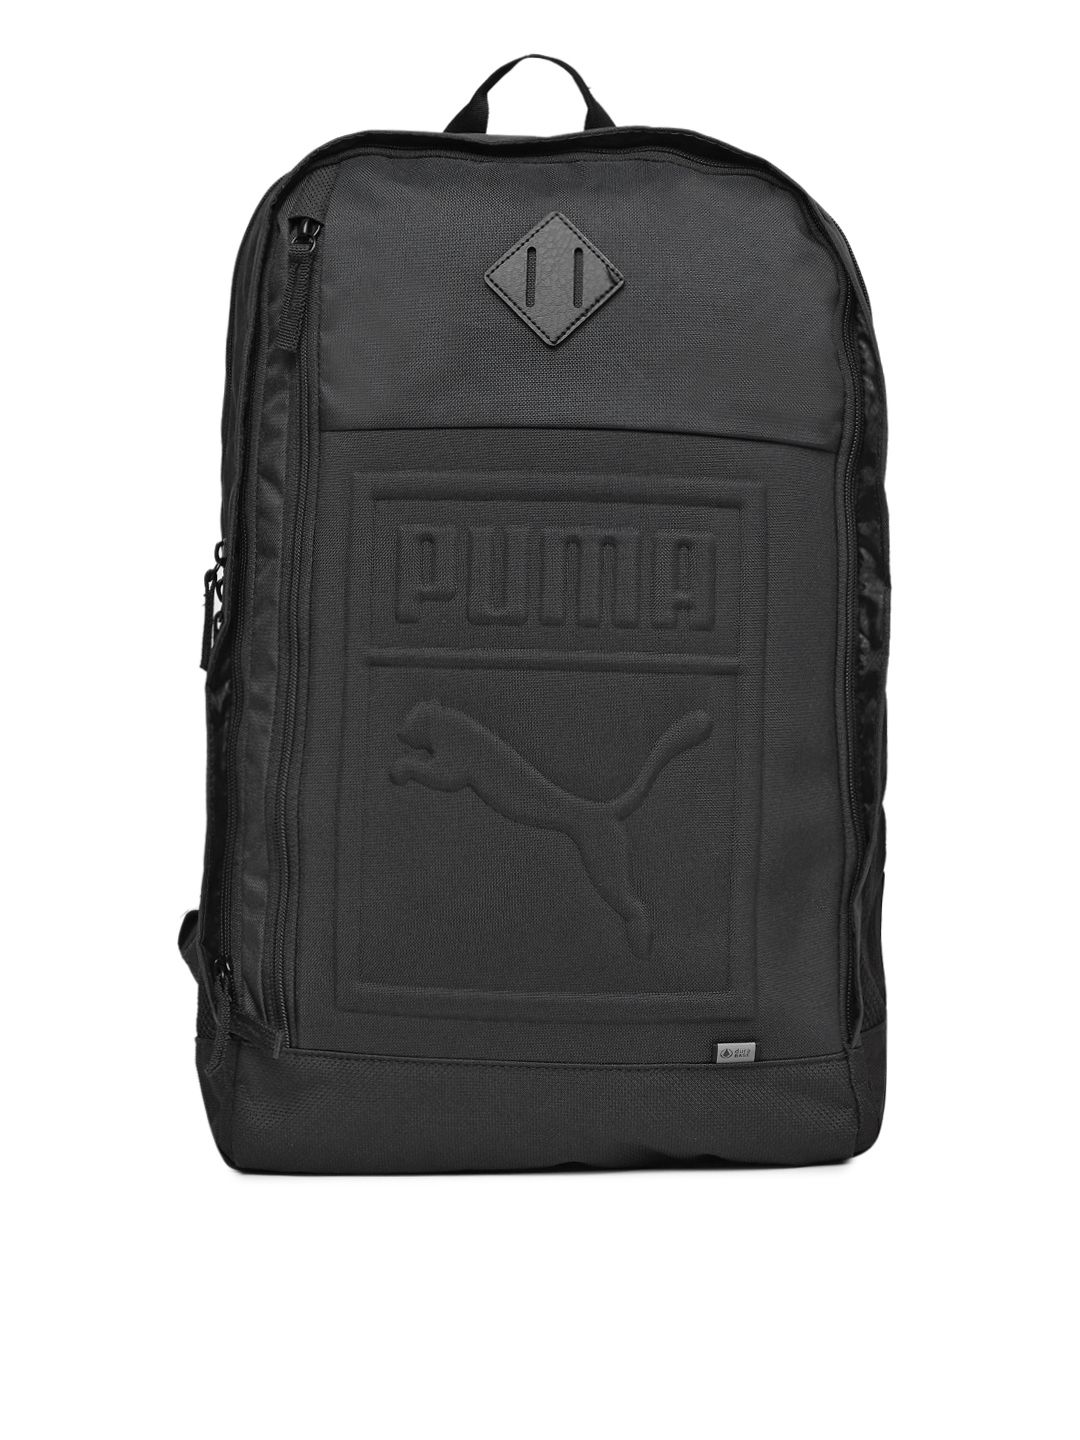 Puma Unisex Black Brand Logo Laptop Backpack Price in India